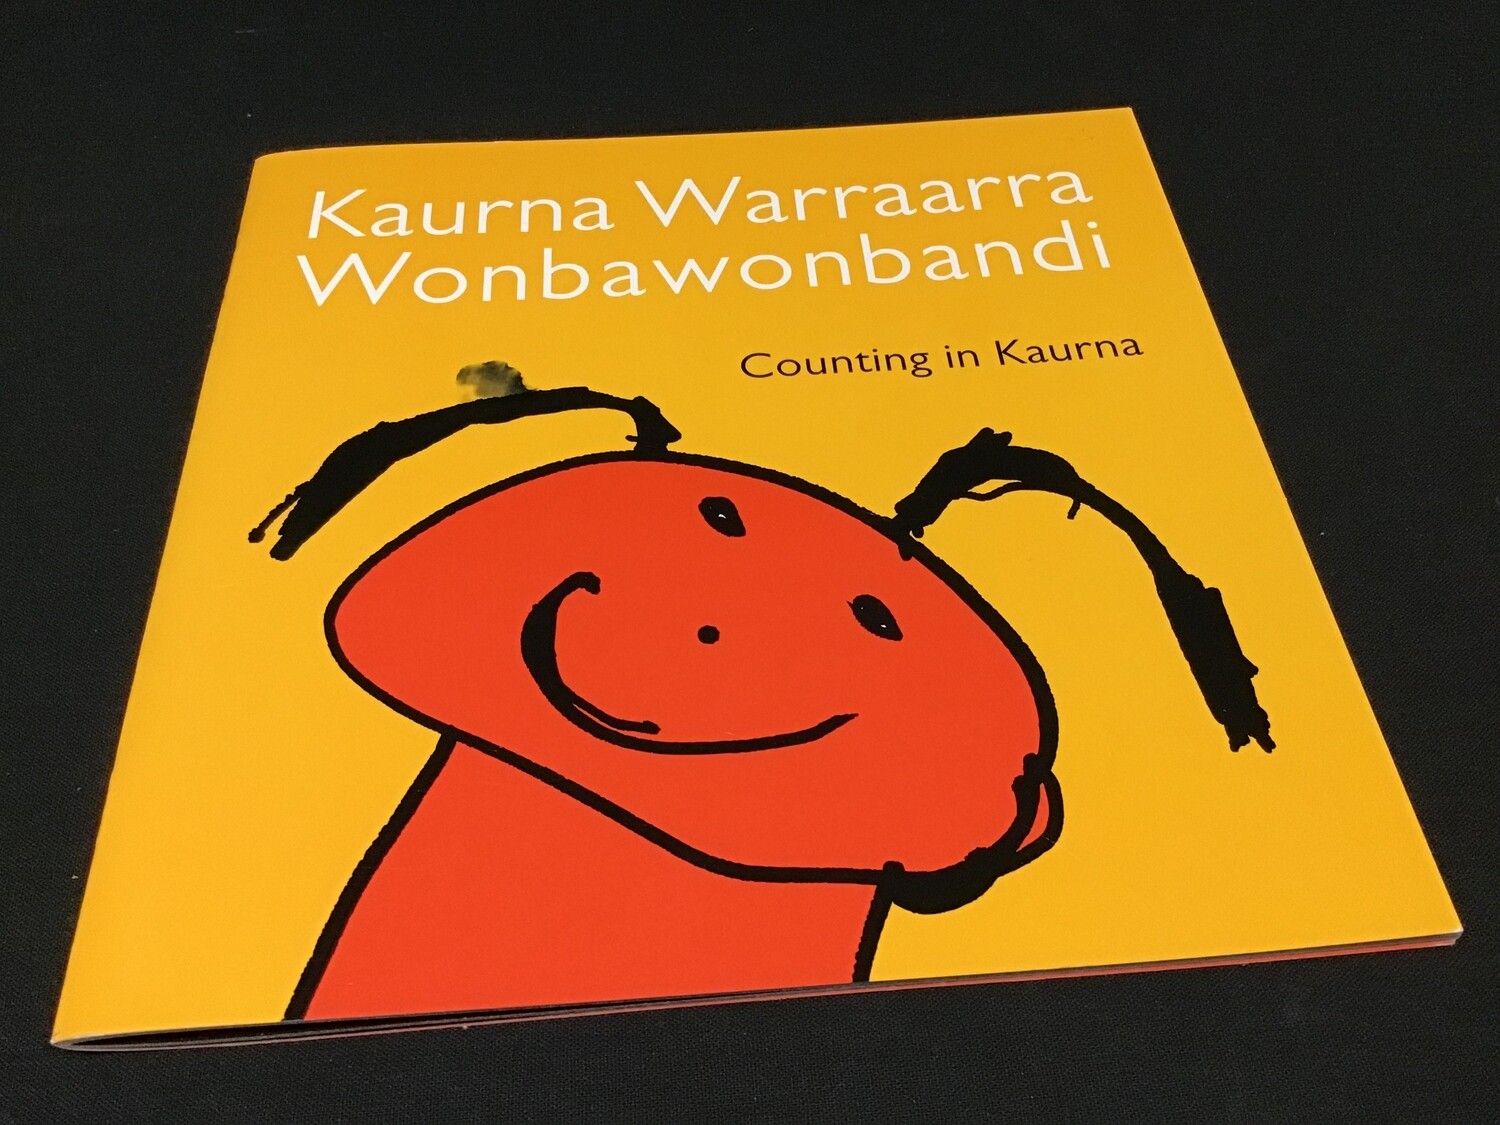 Kaurna Warraarra Wonbawonbandi - Counting in Kaurna